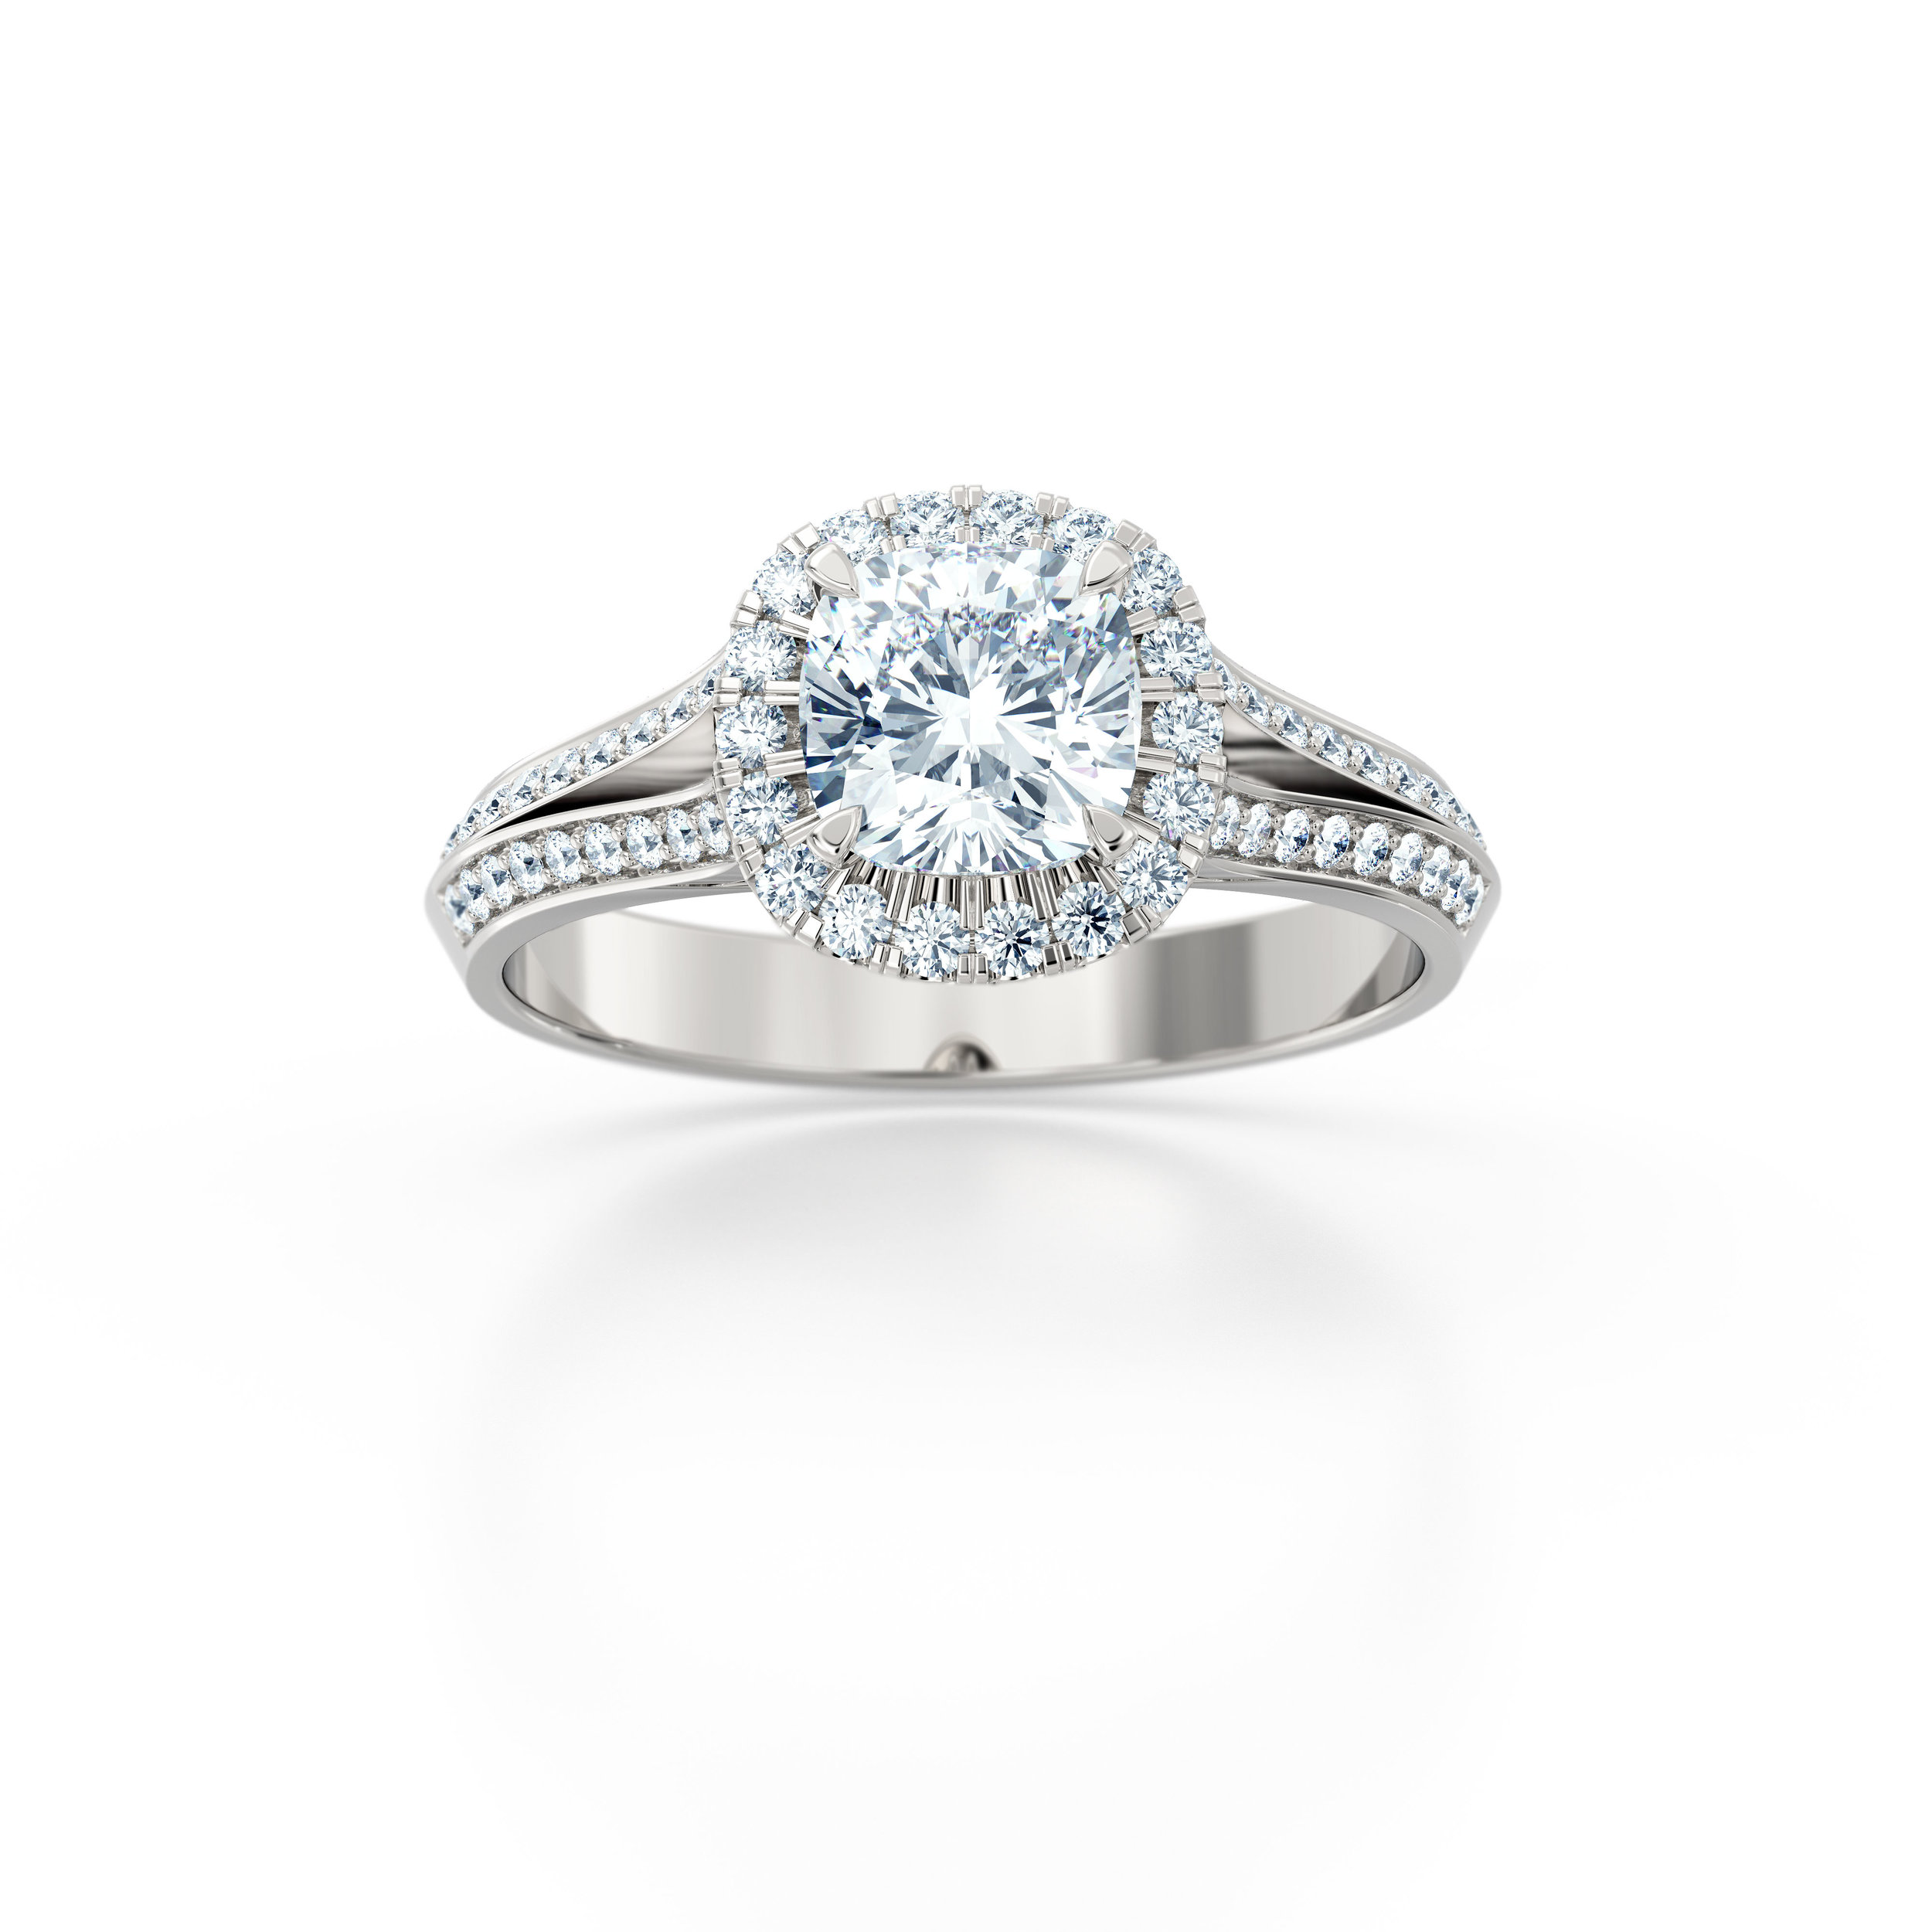 Cushion cut diamond double shank halo engagement ring